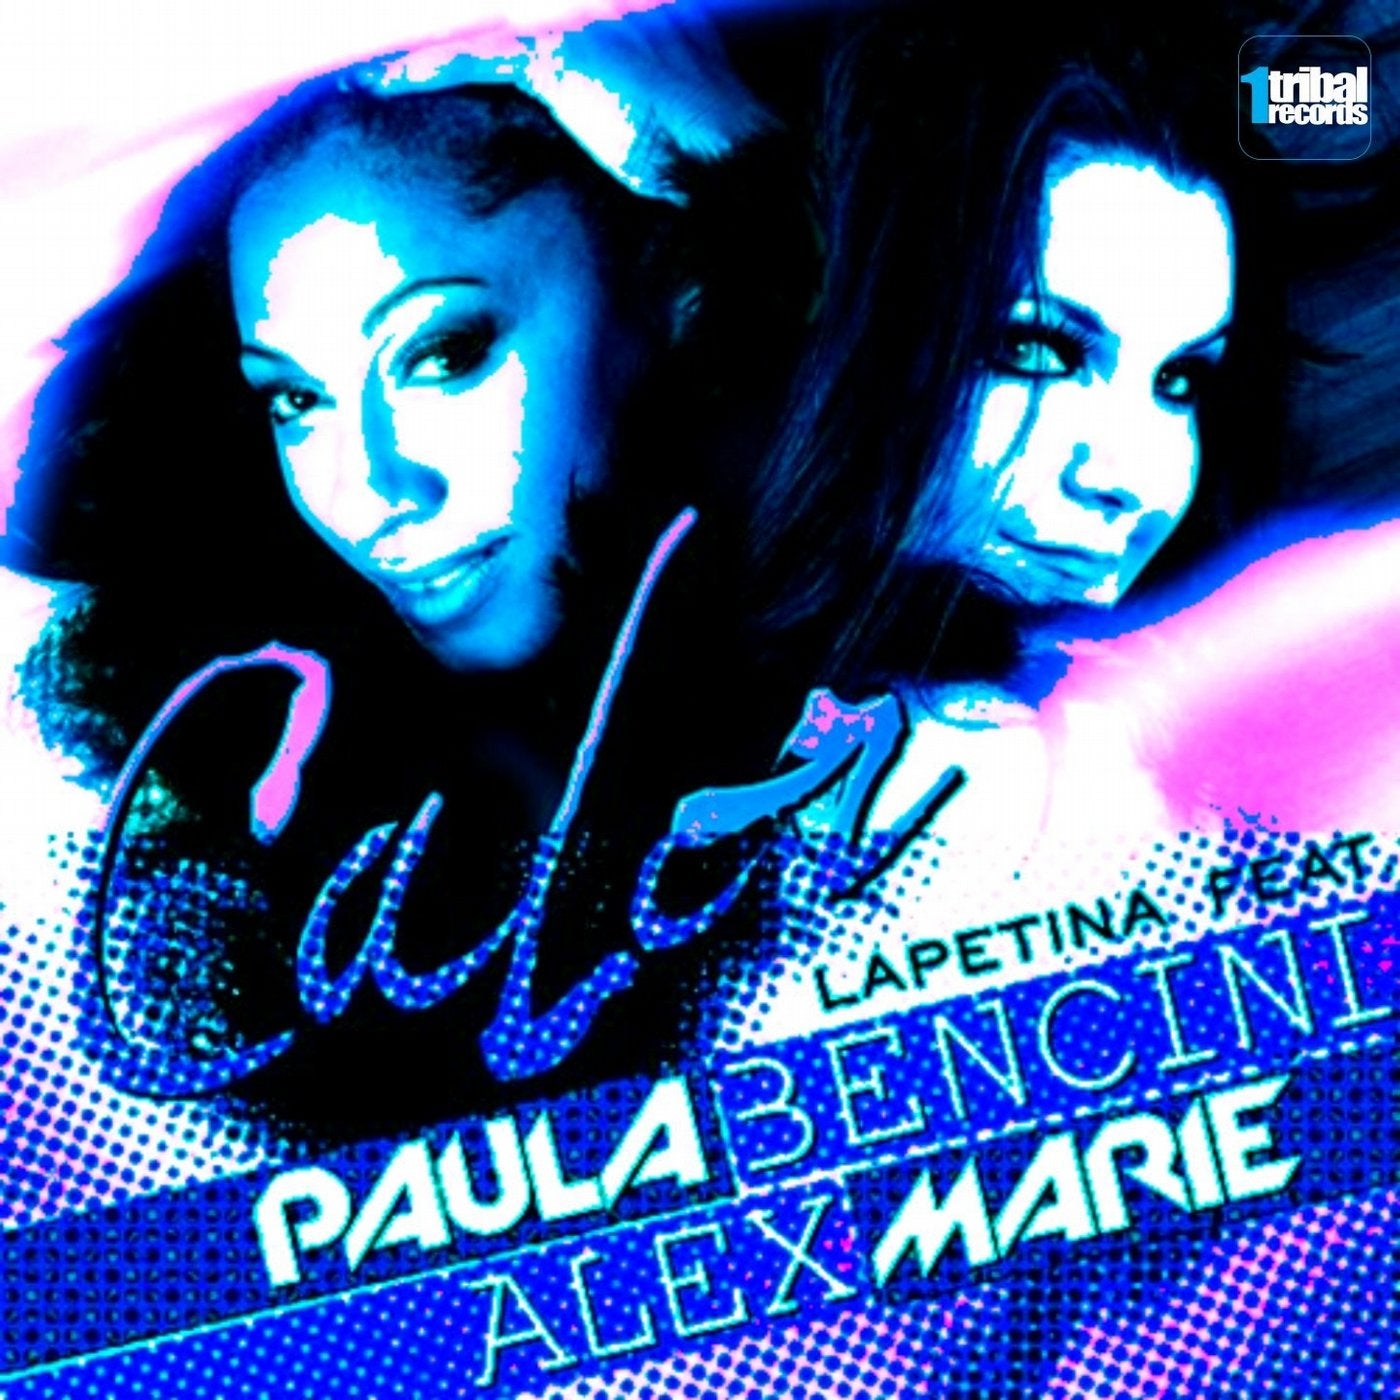 Calor (feat. Paula Bencini, Alex Marie) [Part 2]